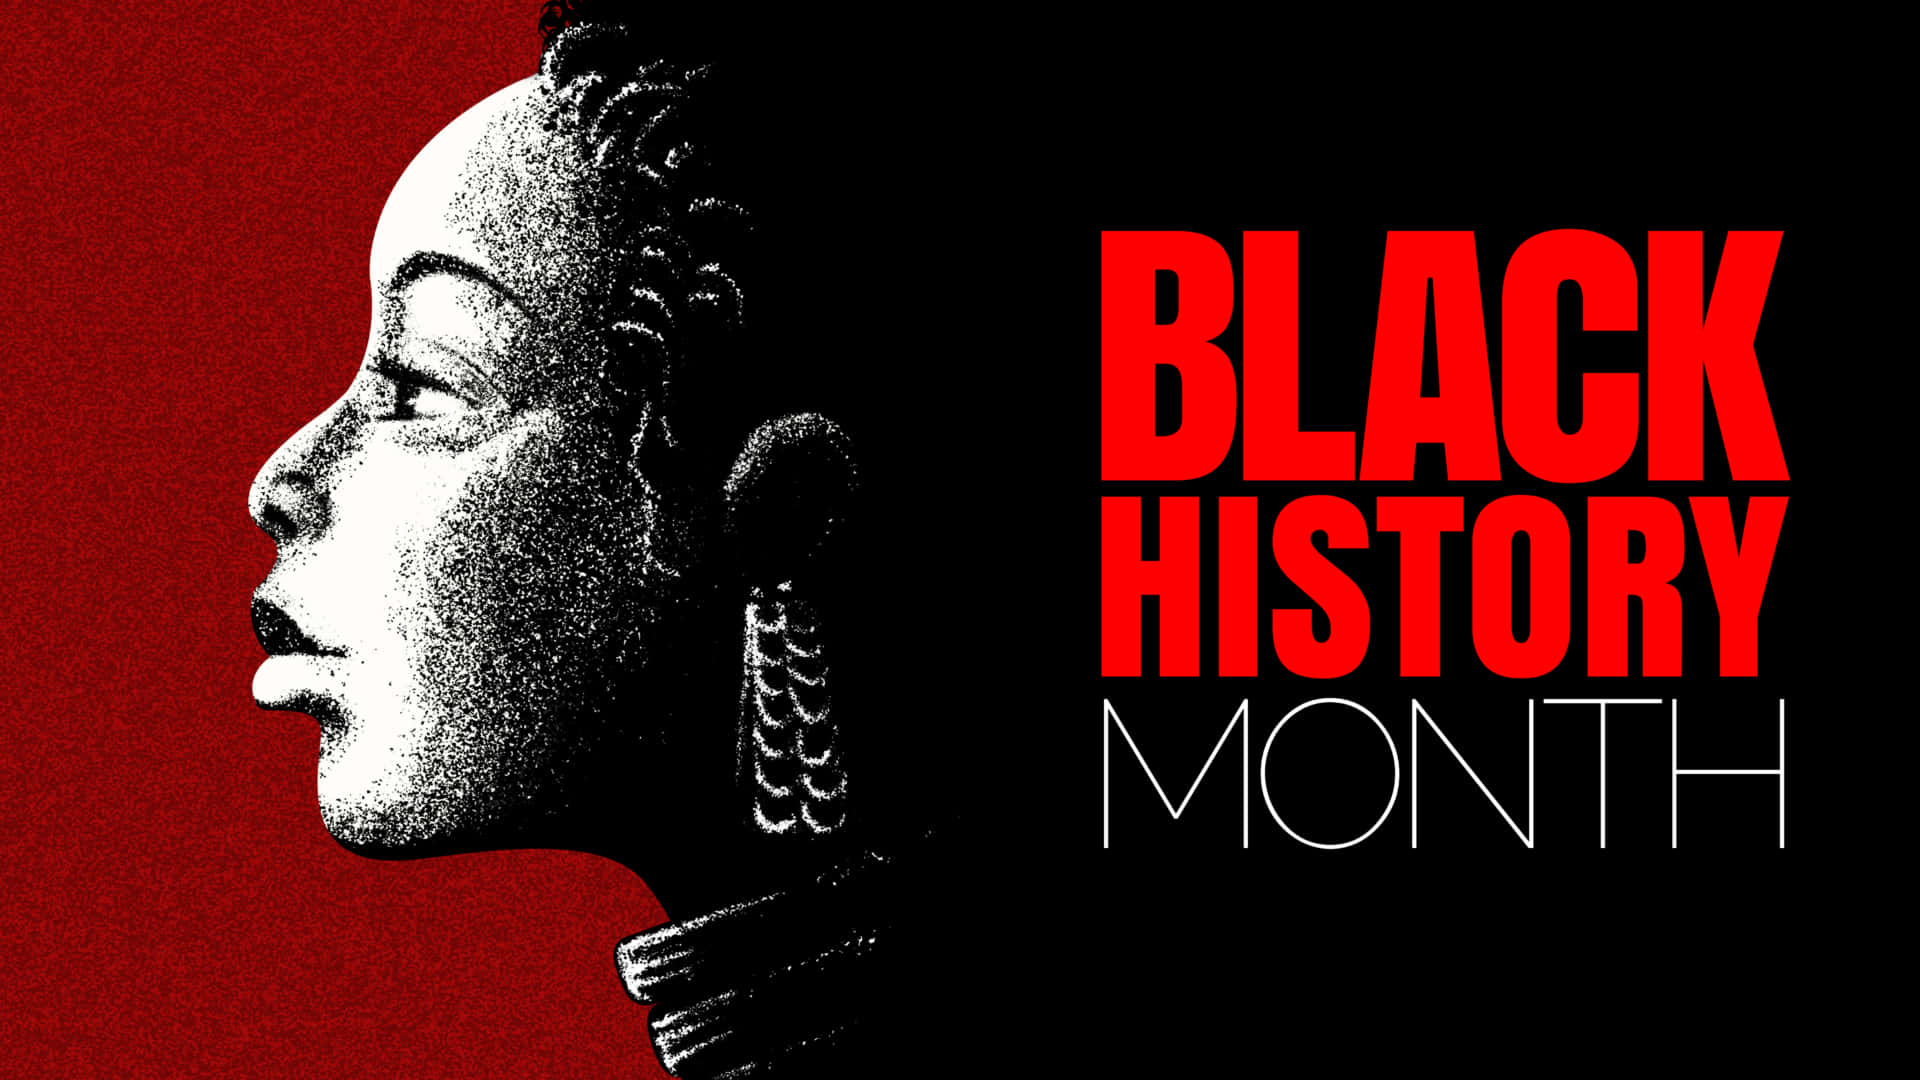 Black History Month Background Images  Free Download on Freepik